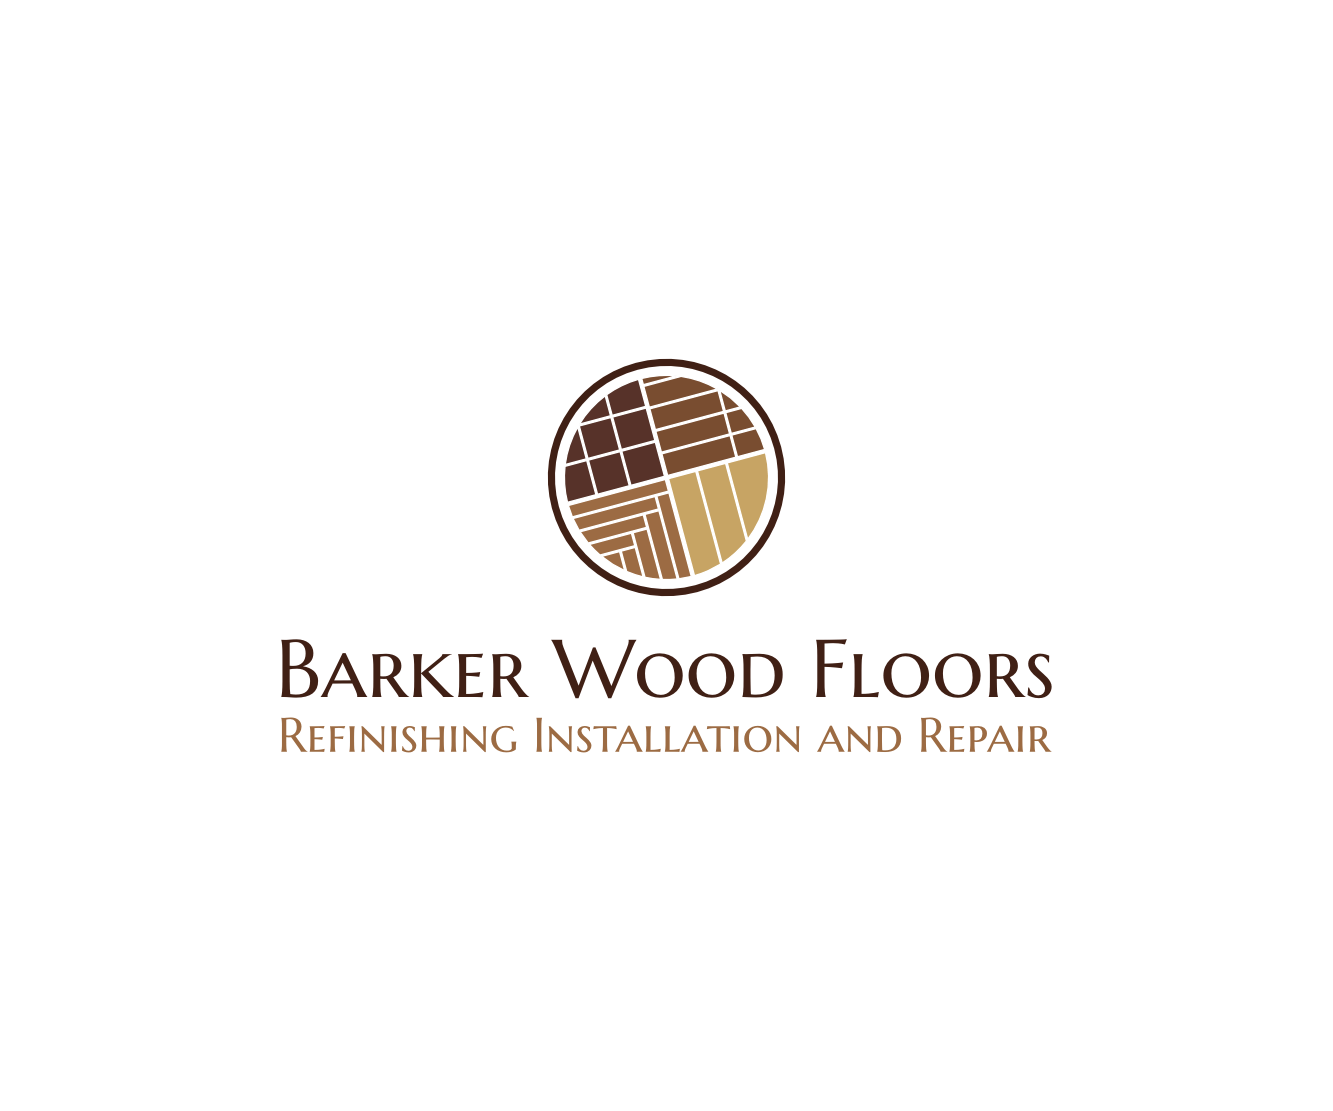 Floor Logo - Masculine, Bold, Woodworking Logo Design for Barker Wood Floors